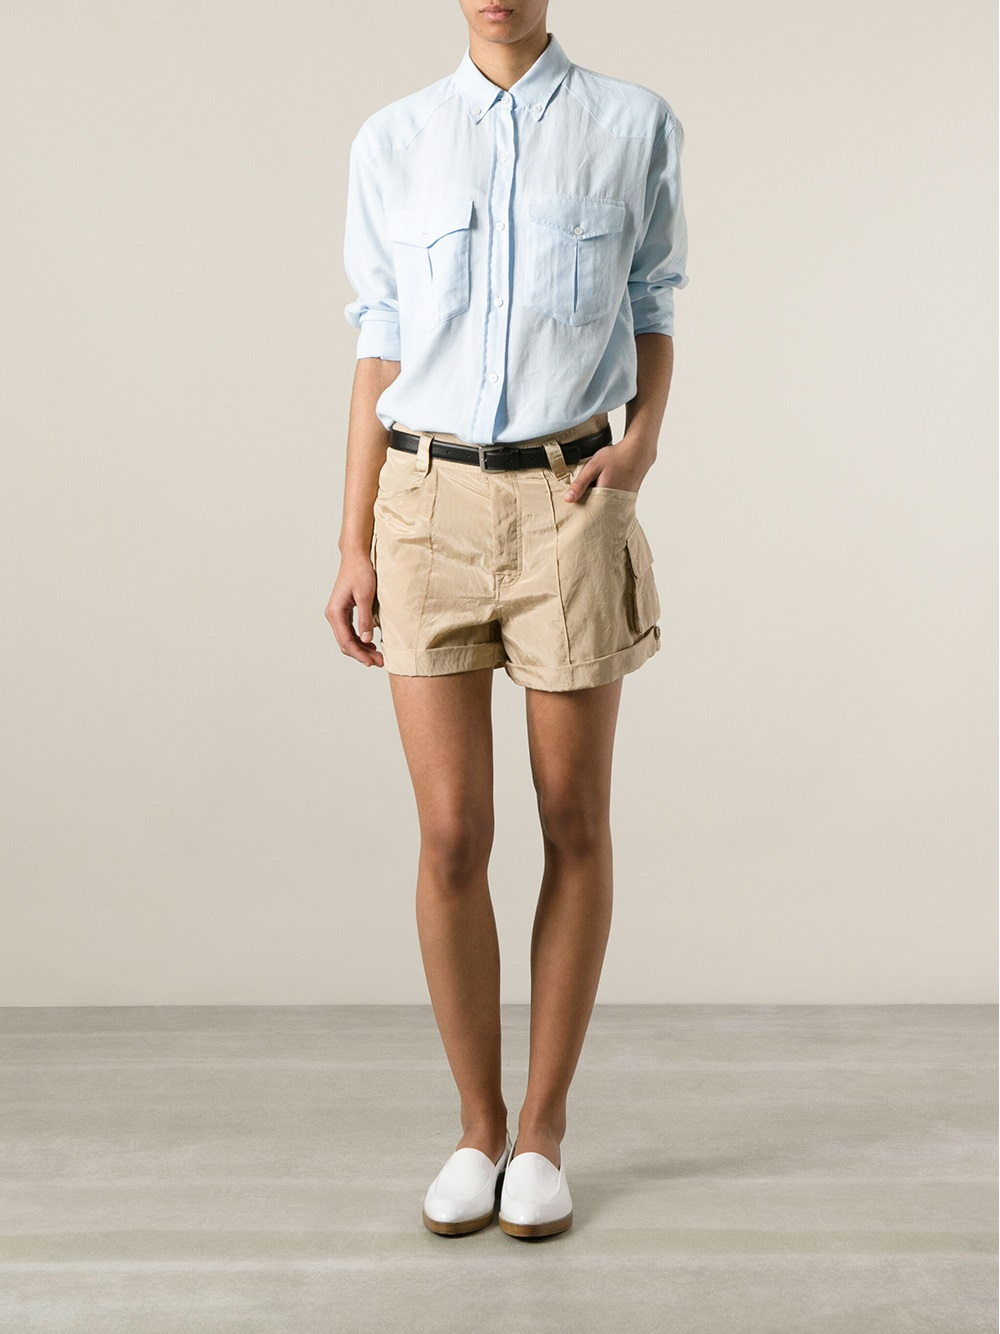 Ralph Lauren Blue Label Safari-Style Shorts in Natural | Lyst